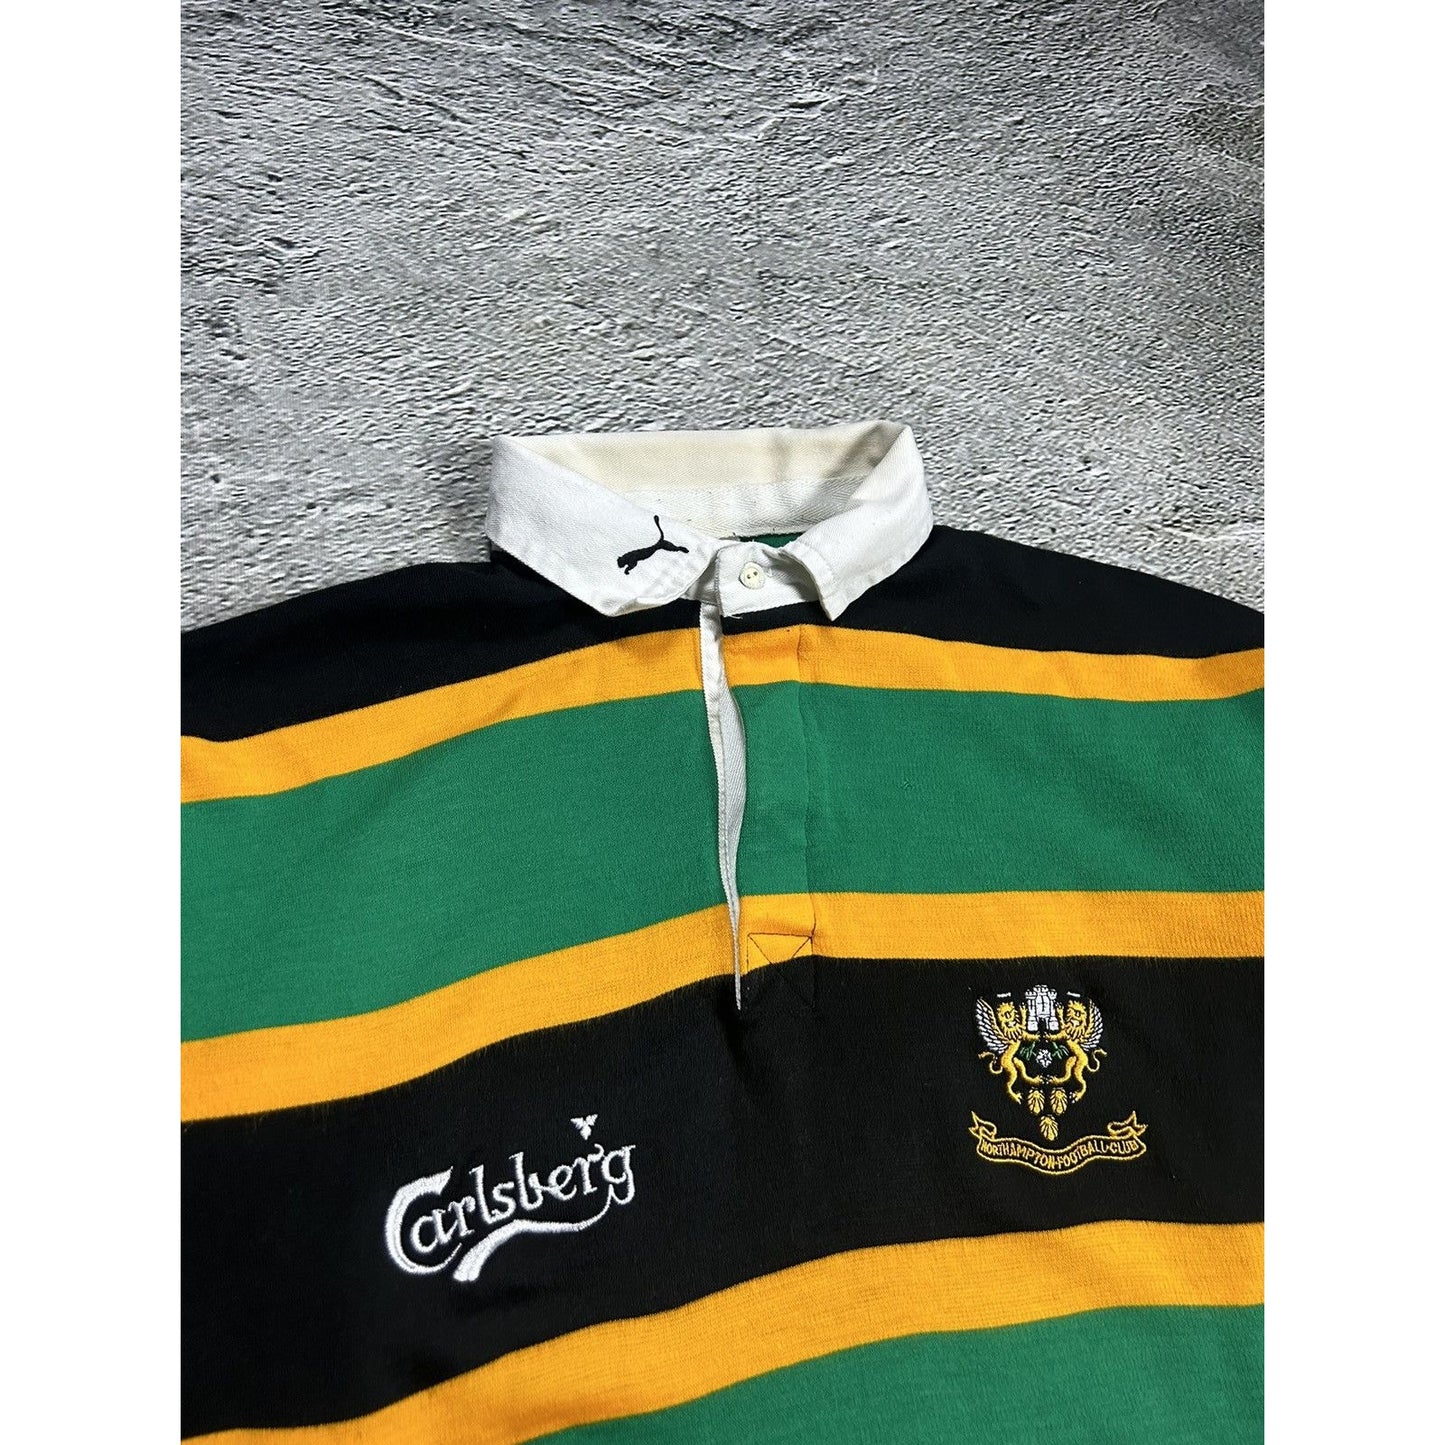 Puma Northampton FC Rugby Shirt jersey Jamaica 90s Carlsberg